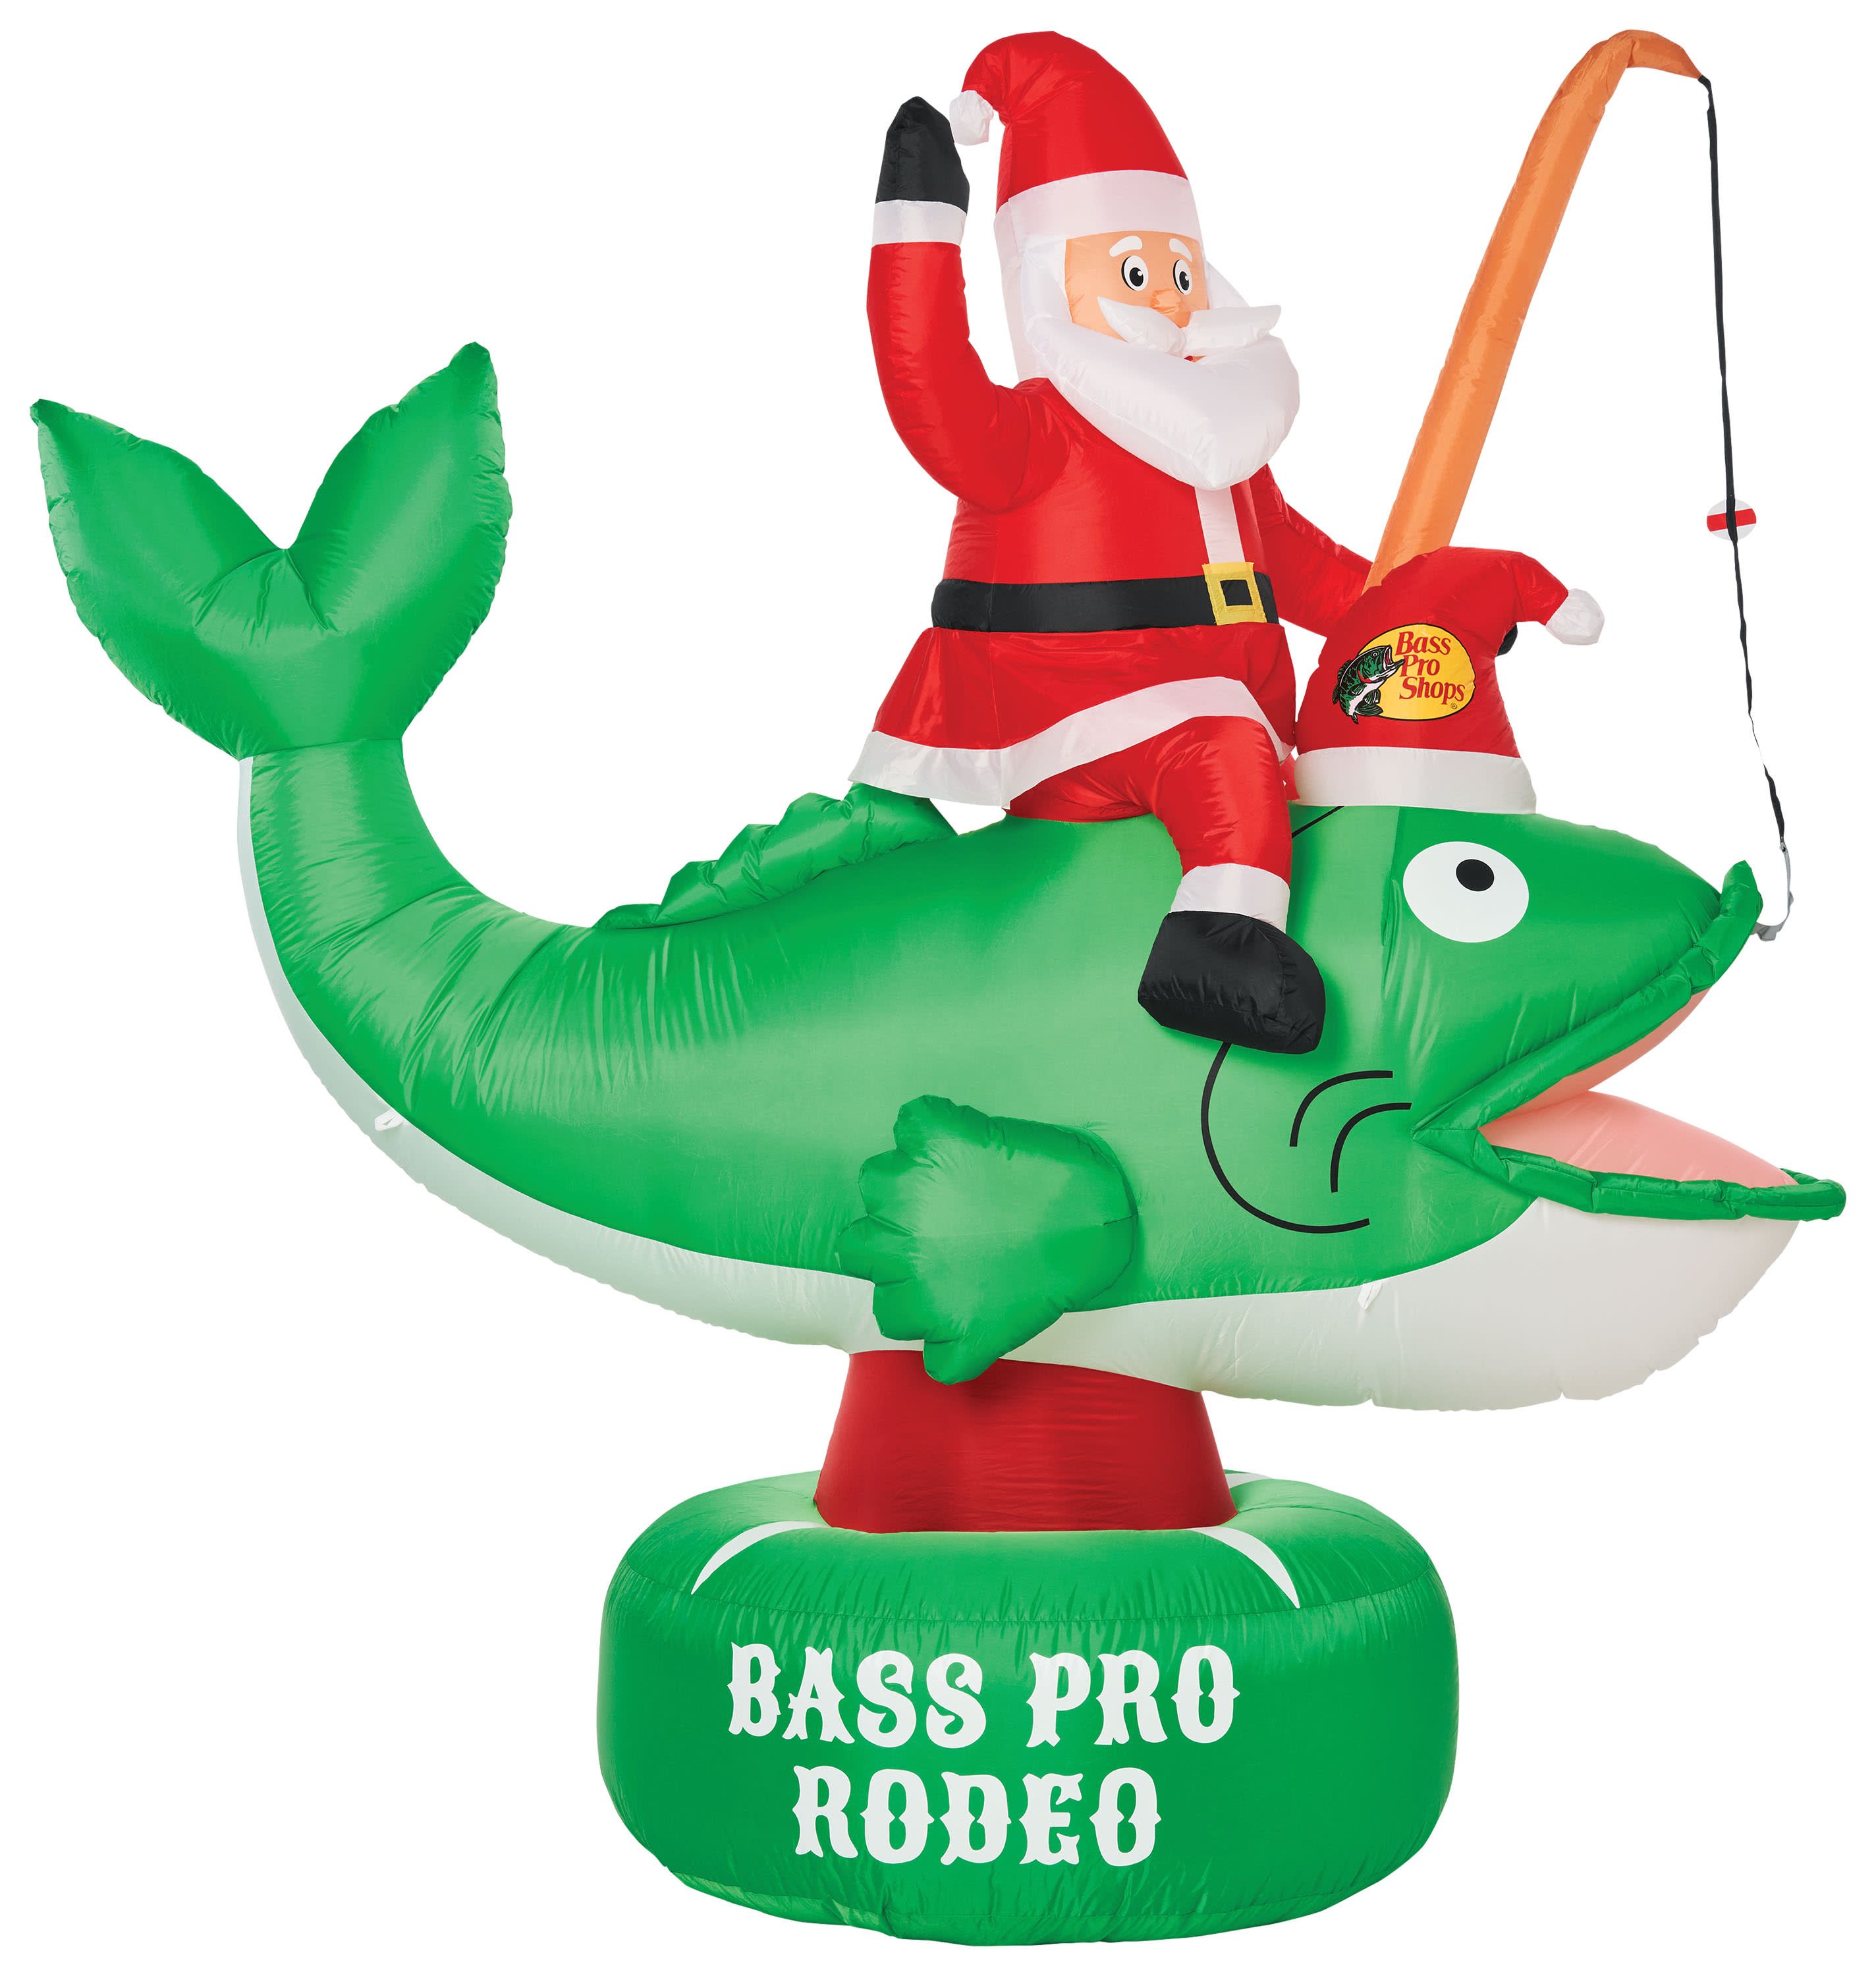 Bass Pro Shops Bass Pro Rodeo Inflatable - Cabelas - BASS PRO 